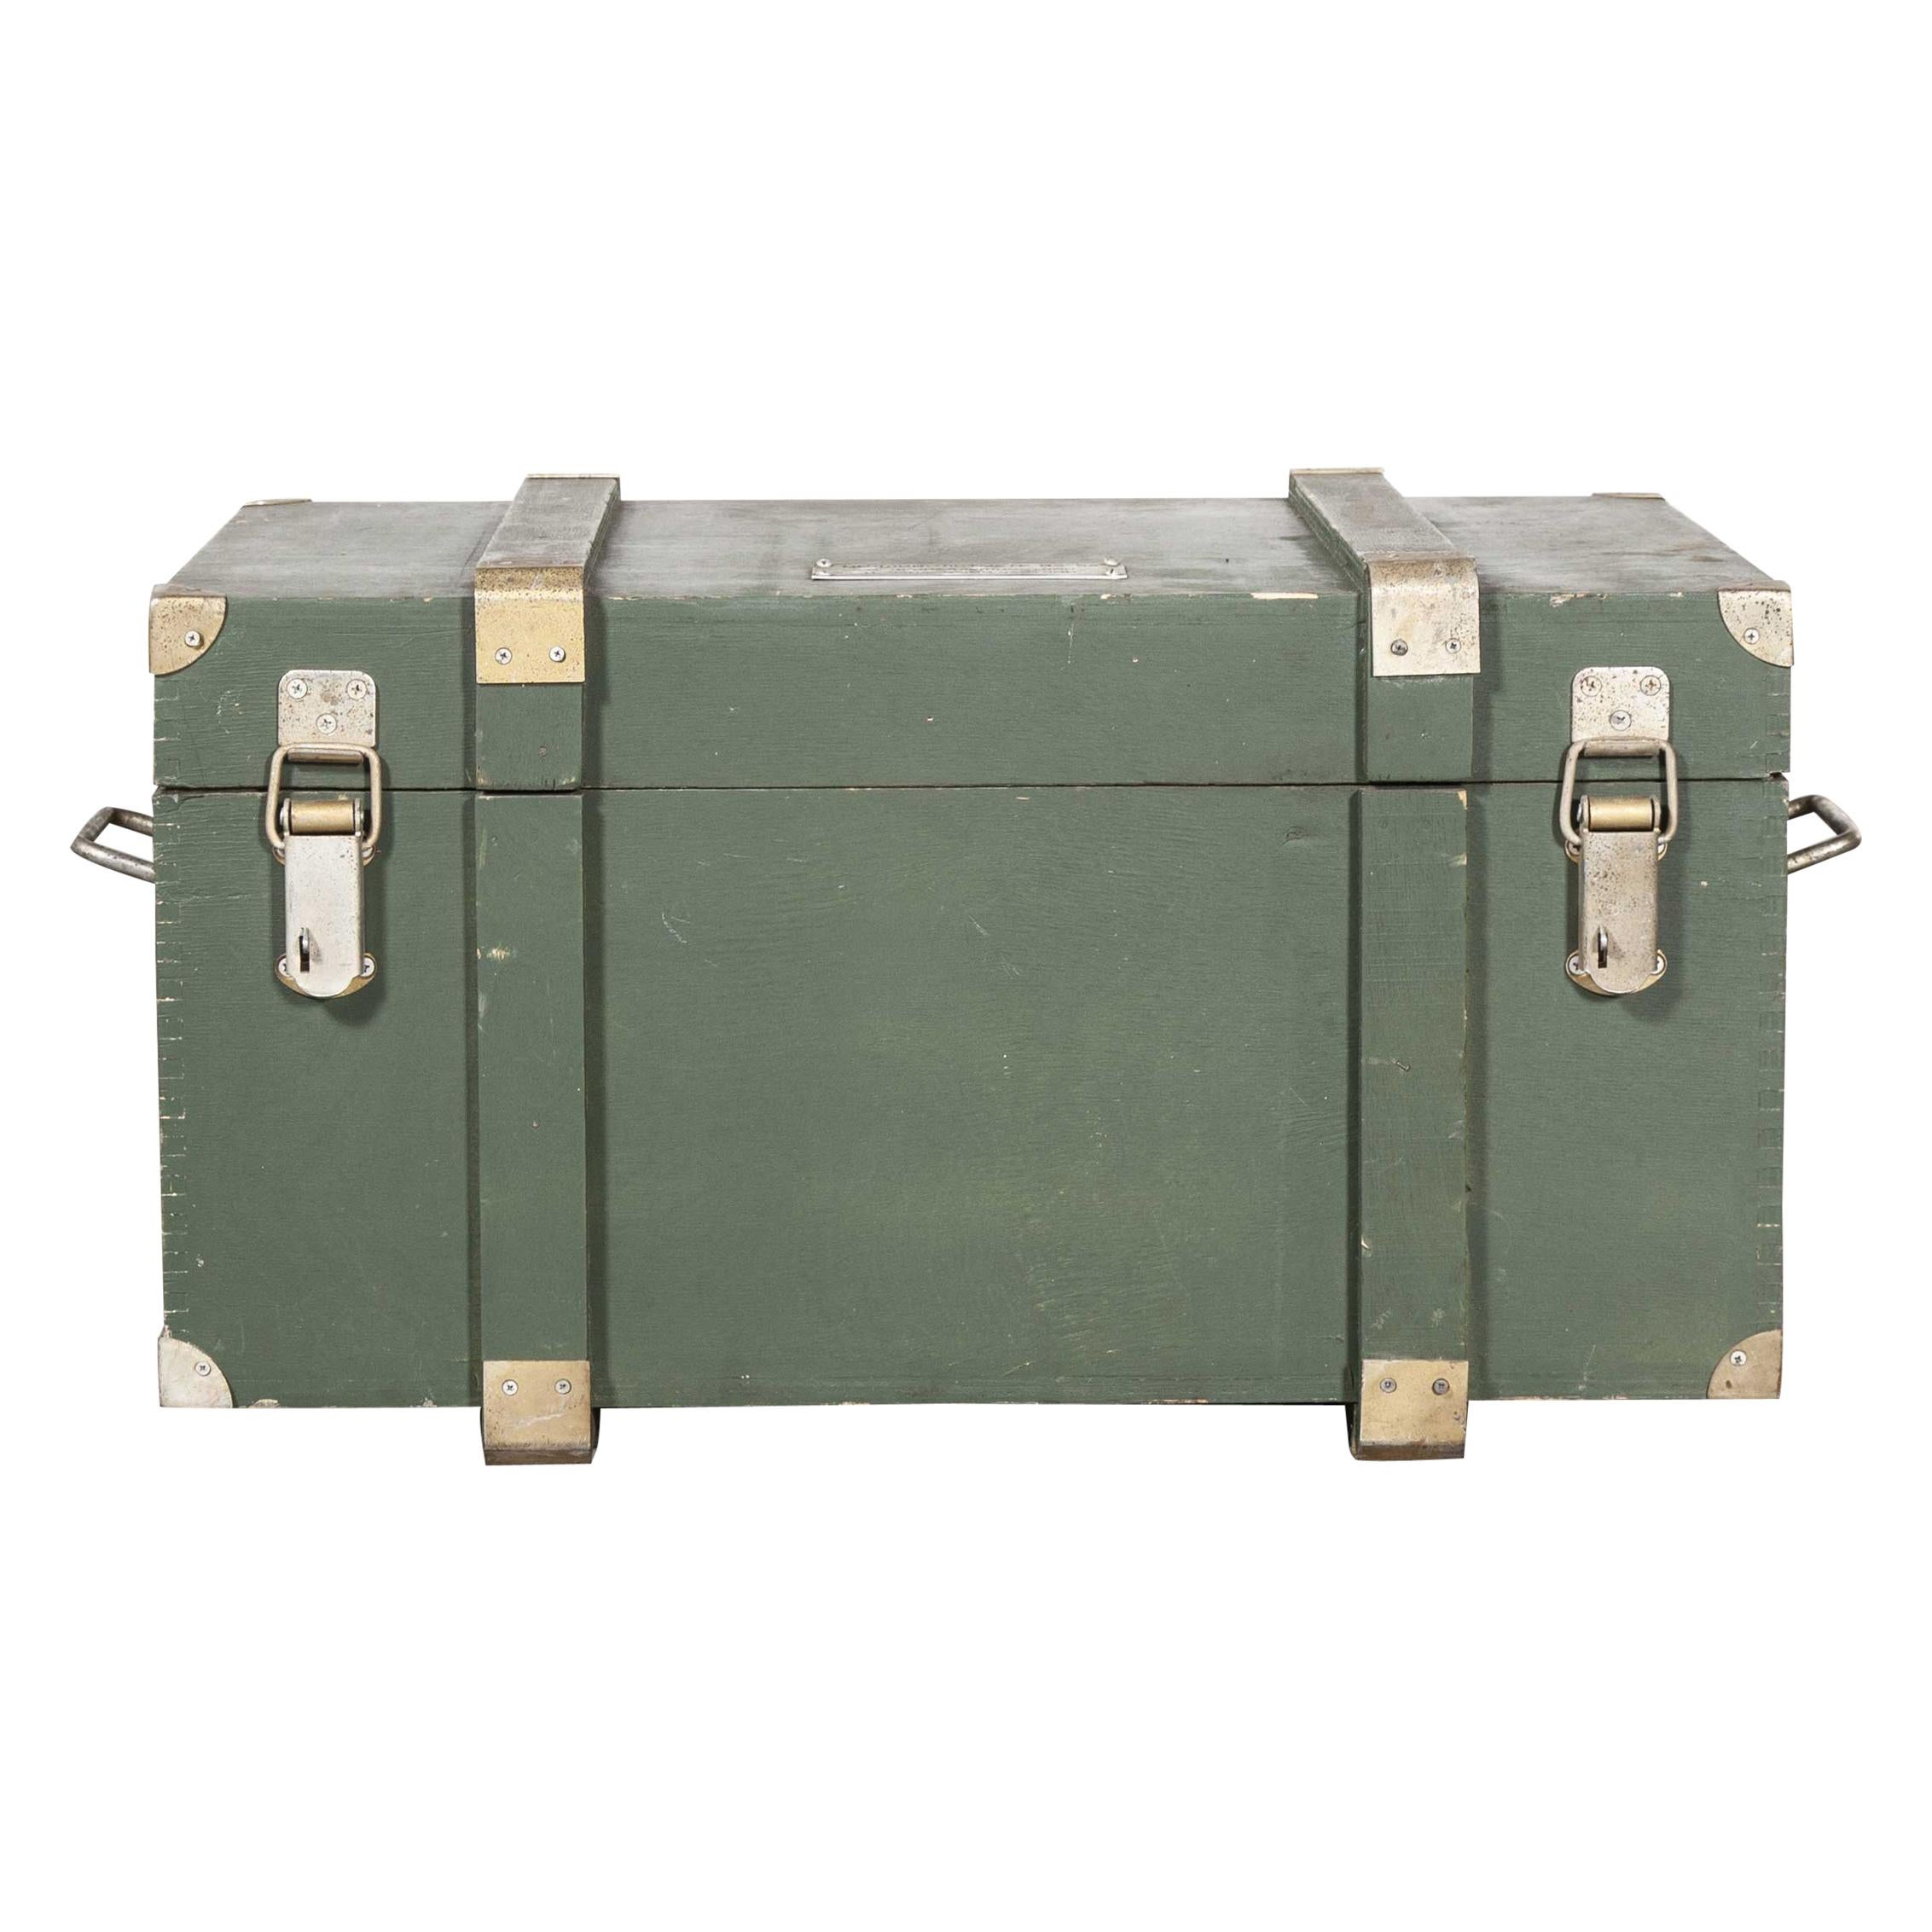 1960s Russian Industrial Equipment Box 'Model 256.9'